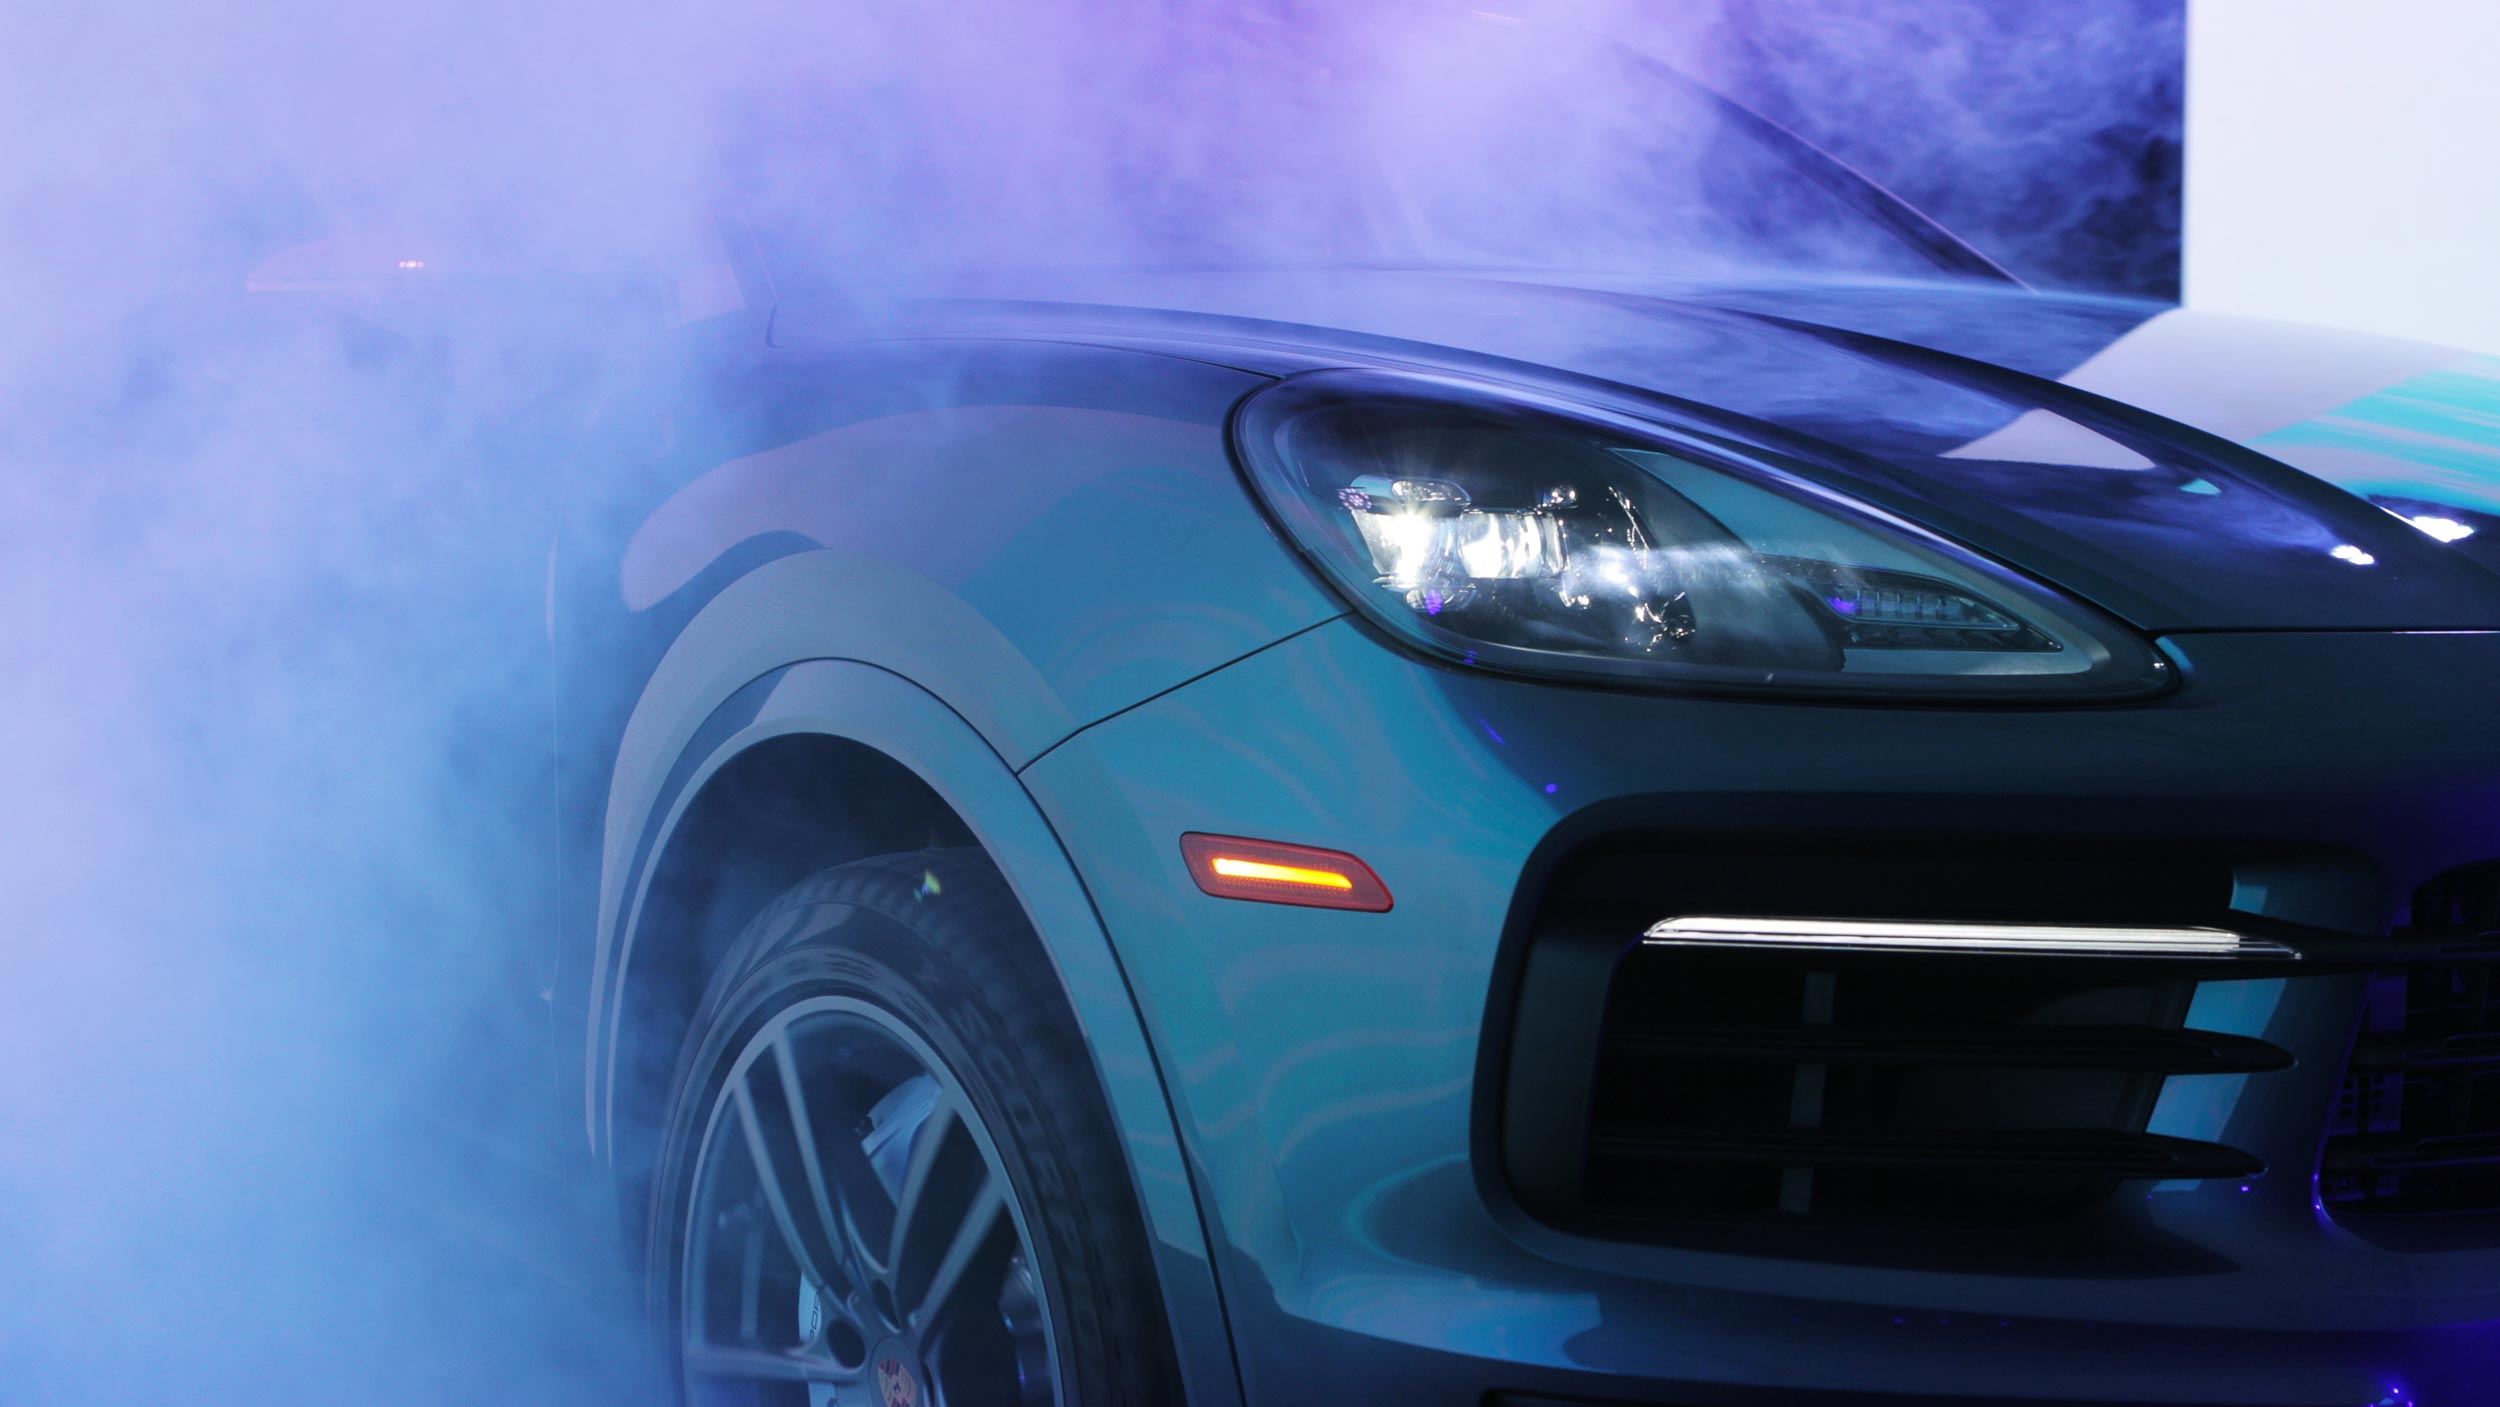 Porsche-car-revealed-in-fog